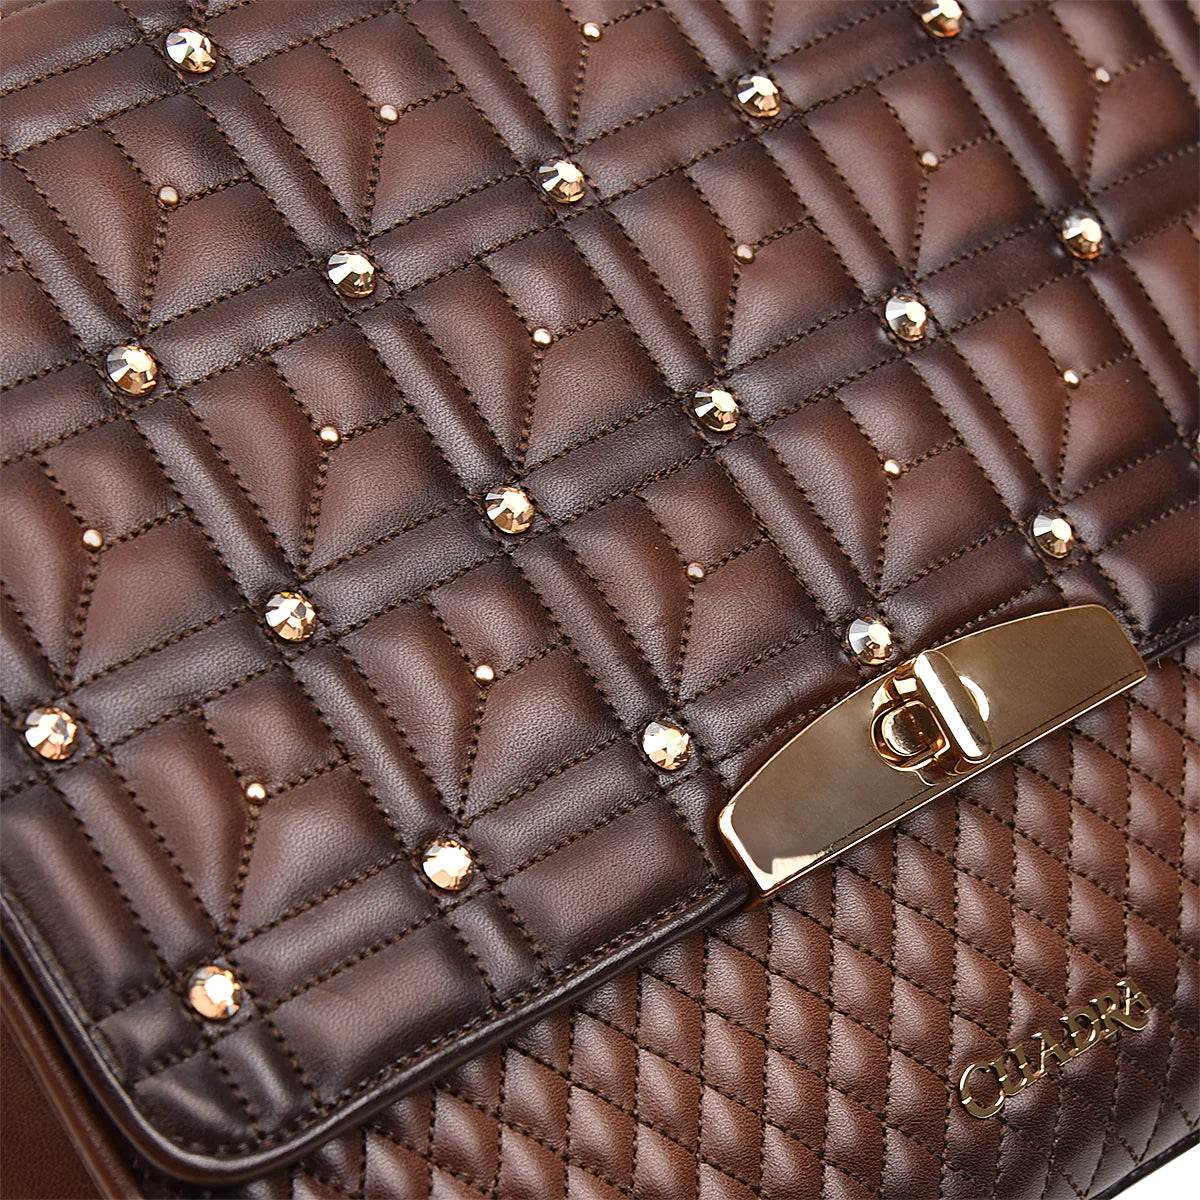 Cuadra Honey Exotic Leather Handbag